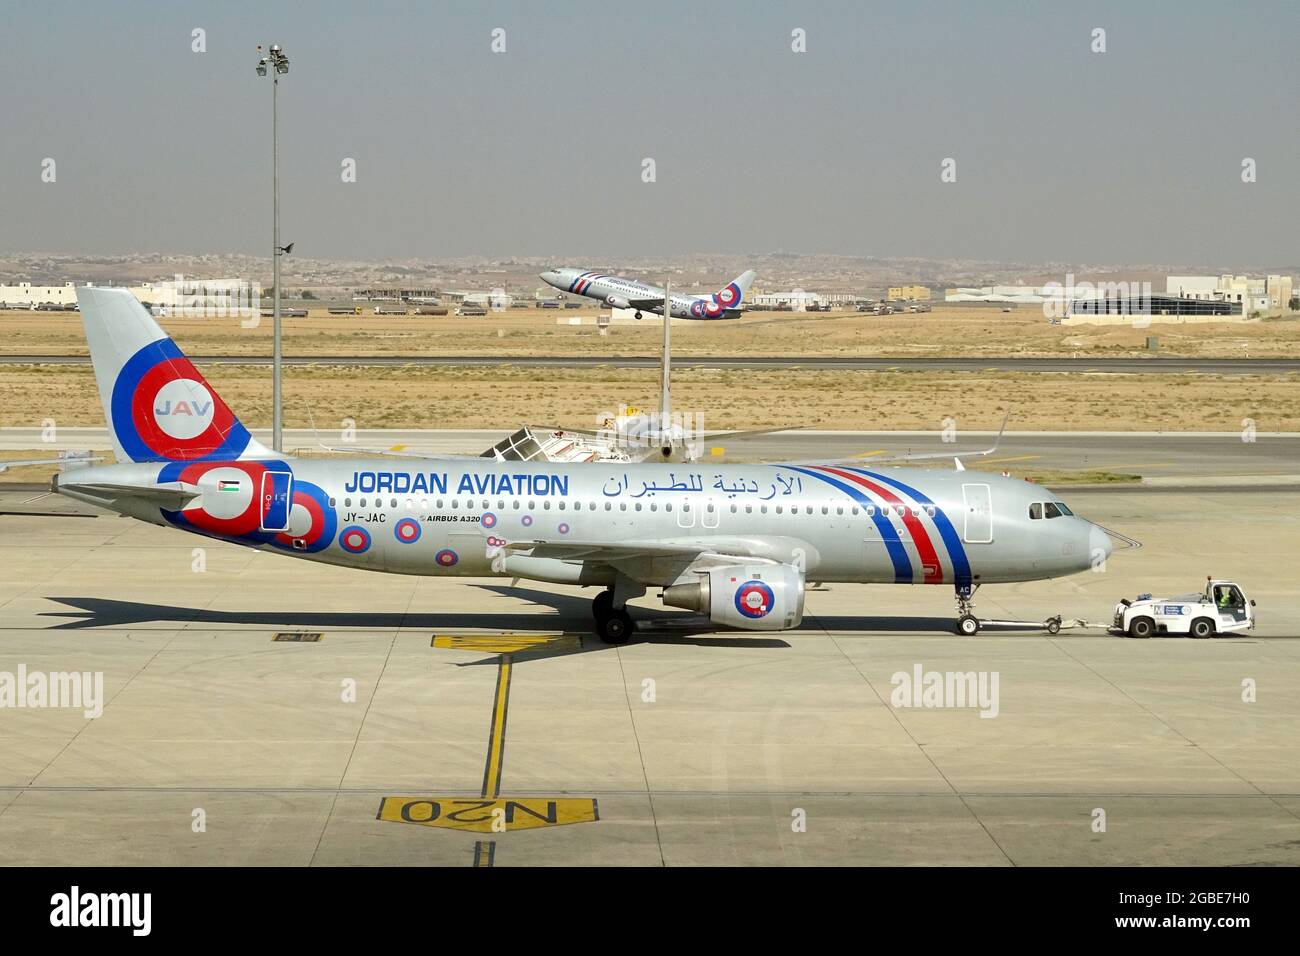 Jordan Aviation, Airbus A320 airplane Stock Photo - Alamy